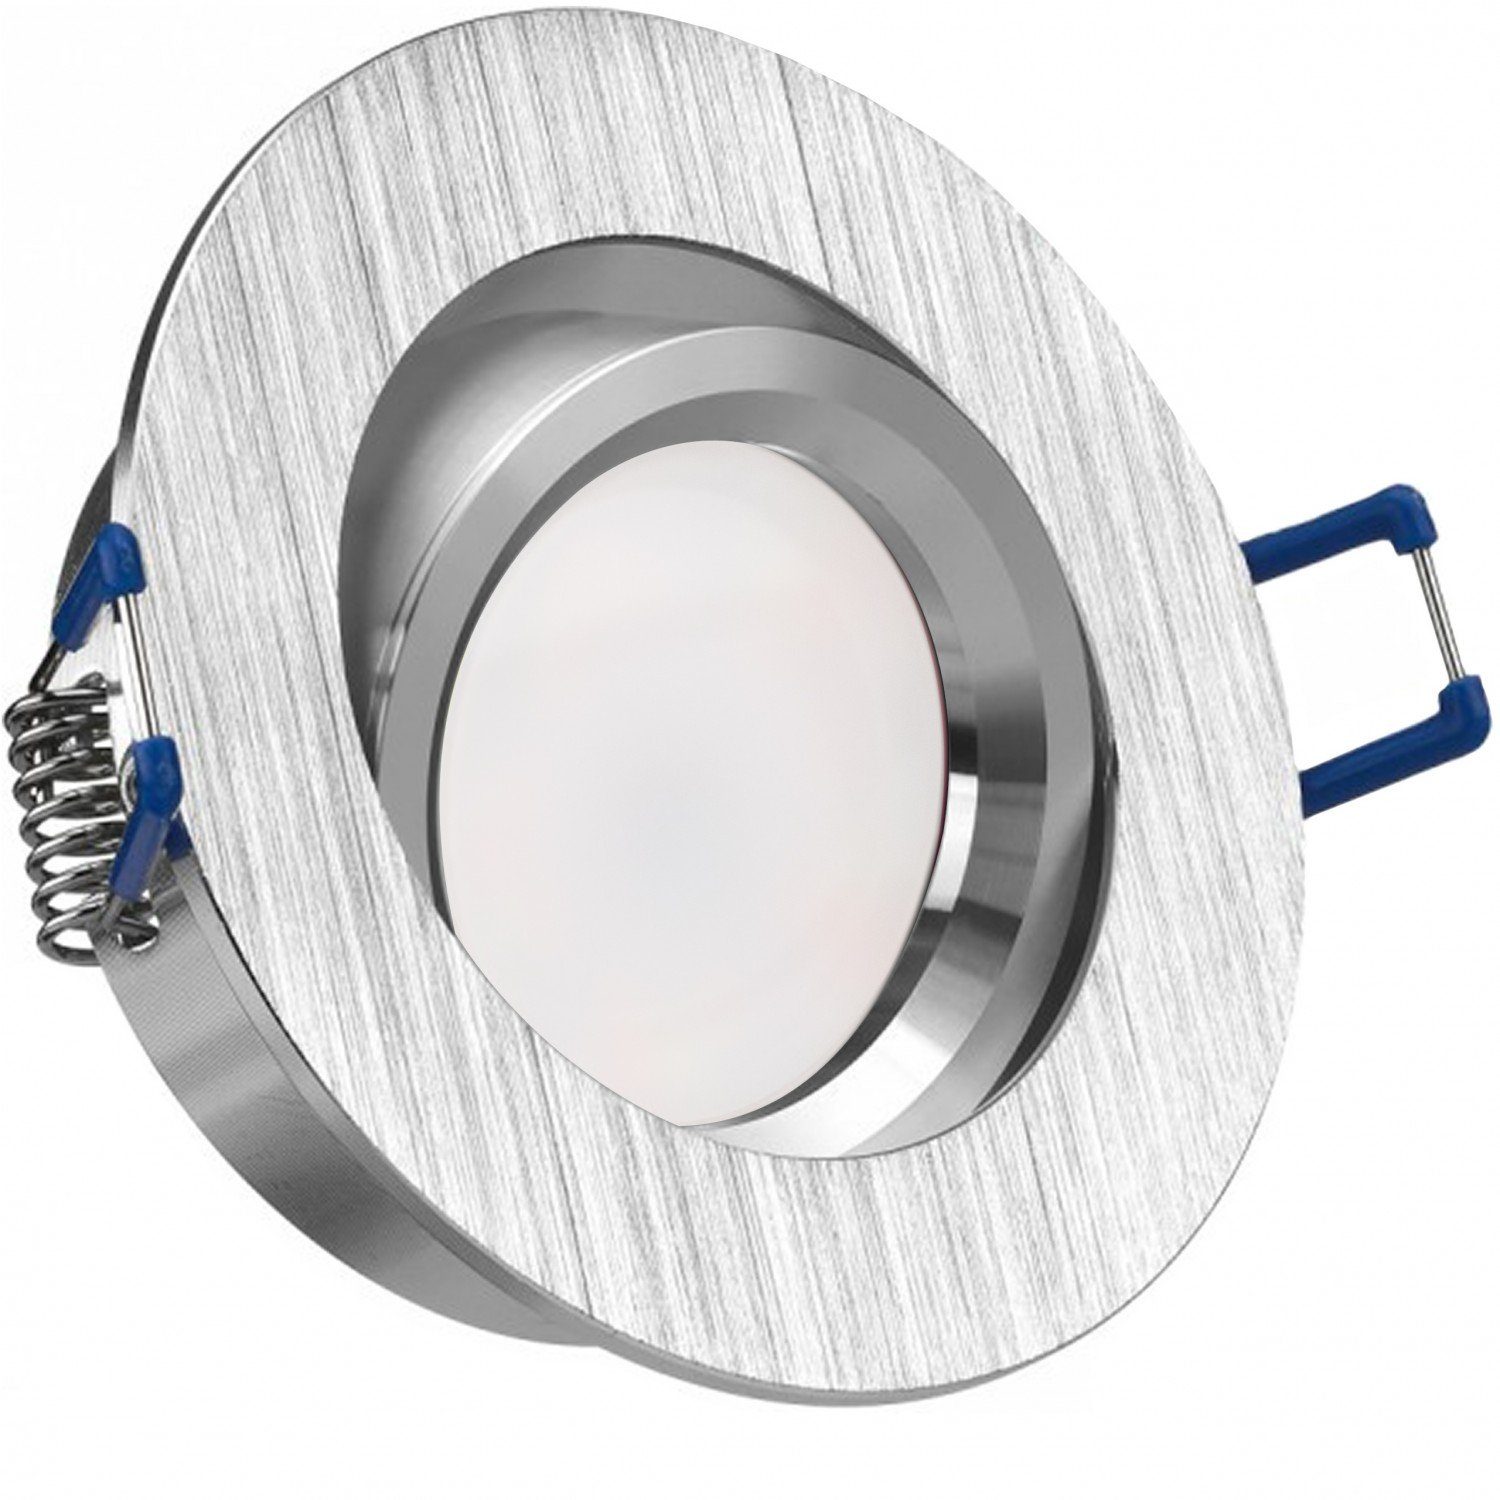 Einbaustrahler mit 5W in gebürstet LED Leuch aluminium flach extra LED Einbaustrahler Set LEDANDO